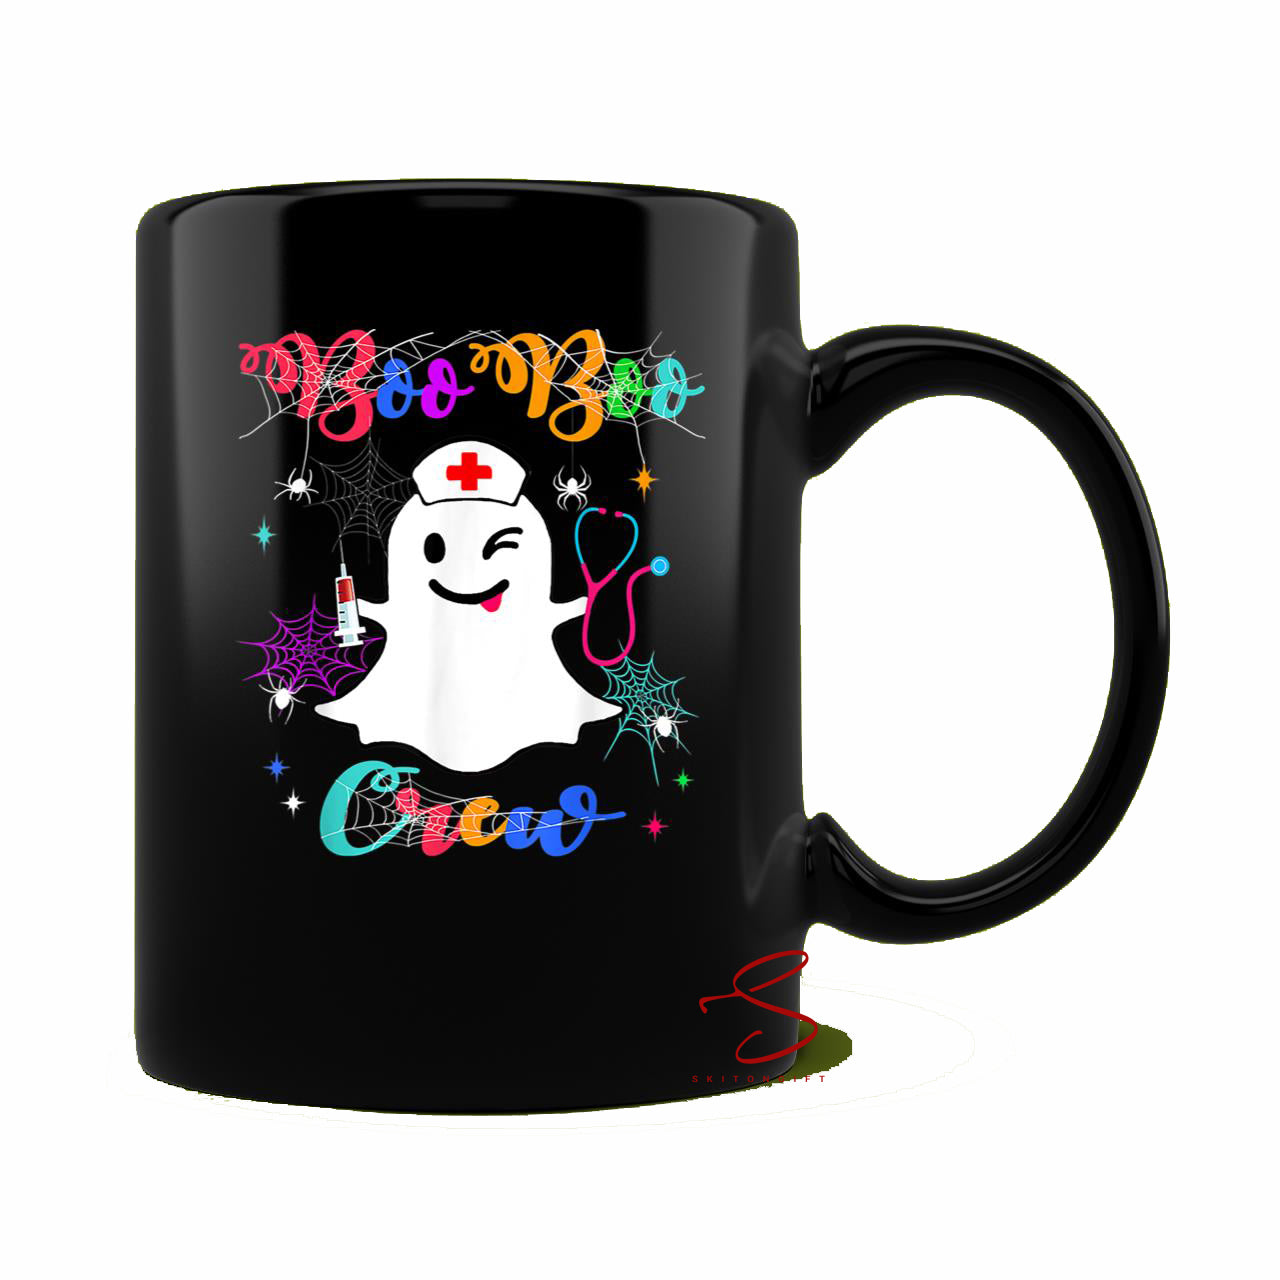 Skitongift Spooky Ceramic Novelty Coffee Mug Funny Halloween Mug Boo Boo Crew Ghost Ems Emt Paramedic Nurse Halloween